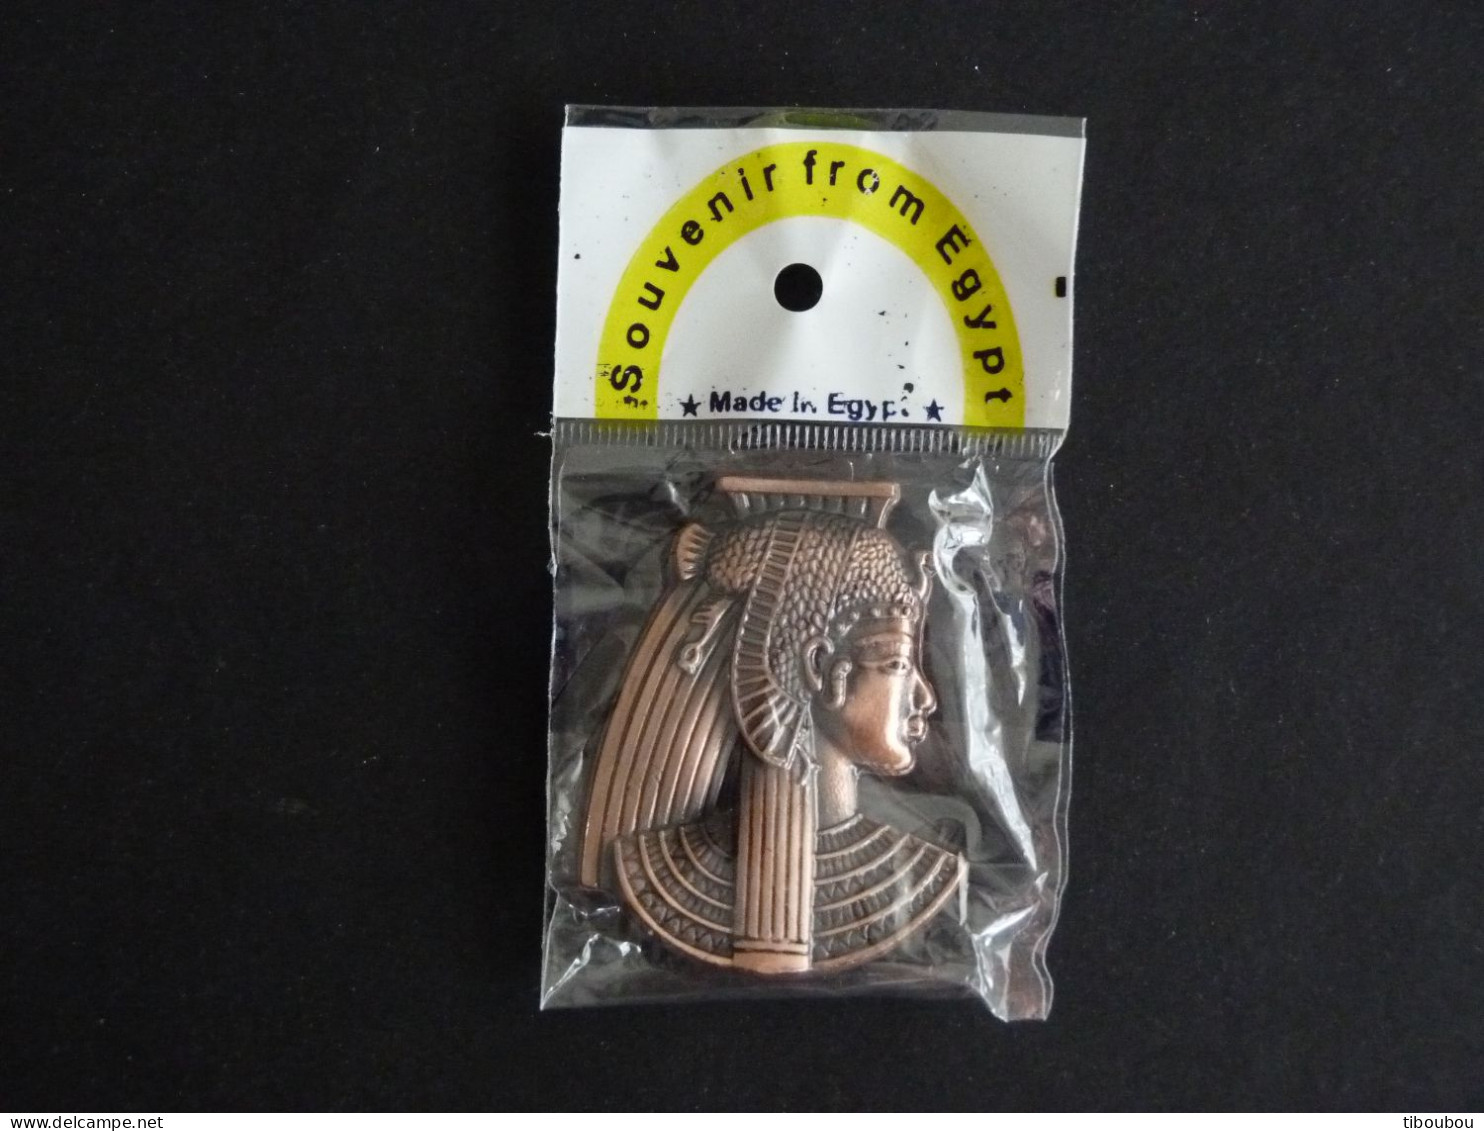 MAGNET EN METAL SOUVENIR FROM EGYPT EGYPTE SOUS BLISTER - CLEOPATRE NEFERTITI - Turismo